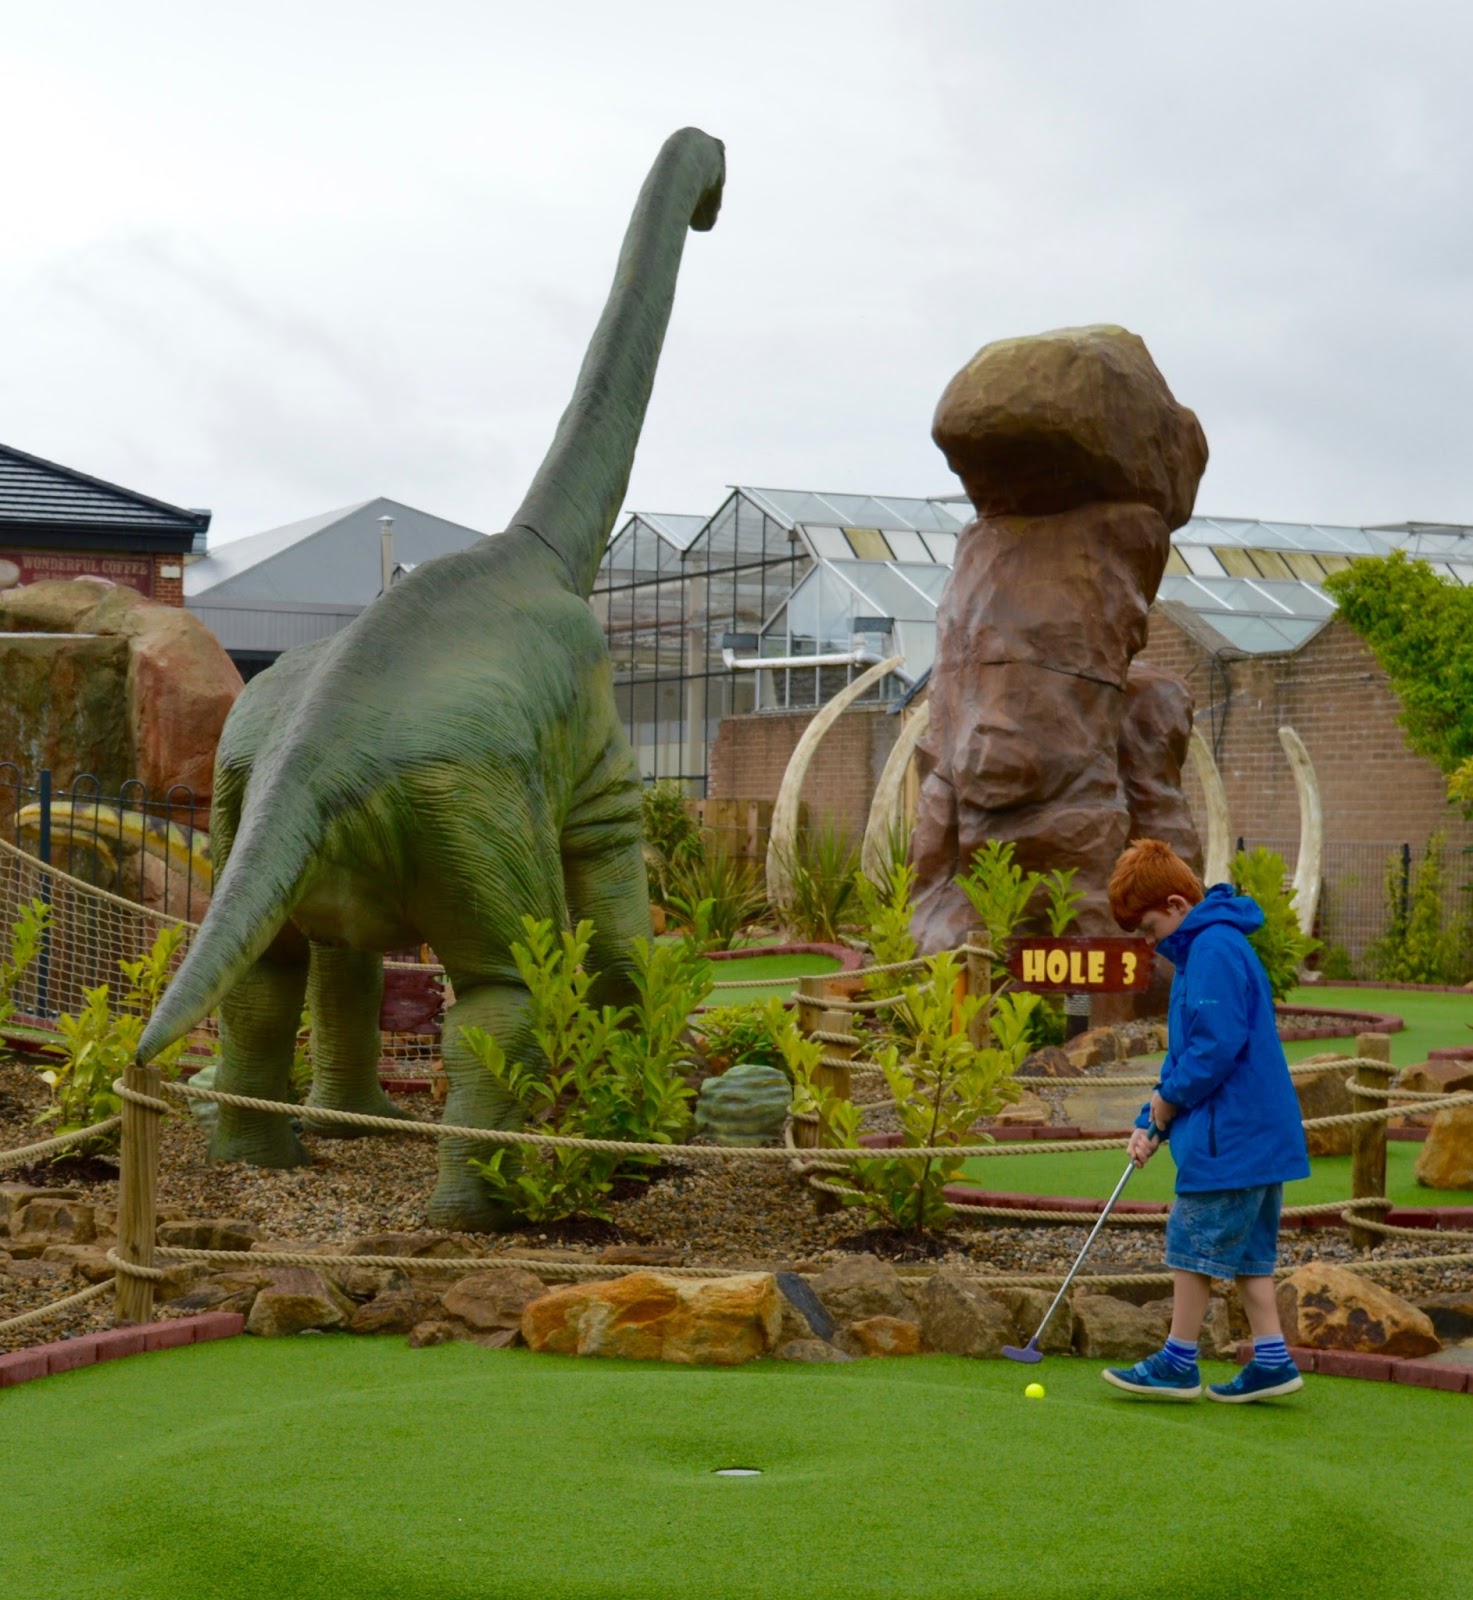 Jurassic Dinosaur Crazy Golf at Heighley Gate Garden Centre near Morpeth